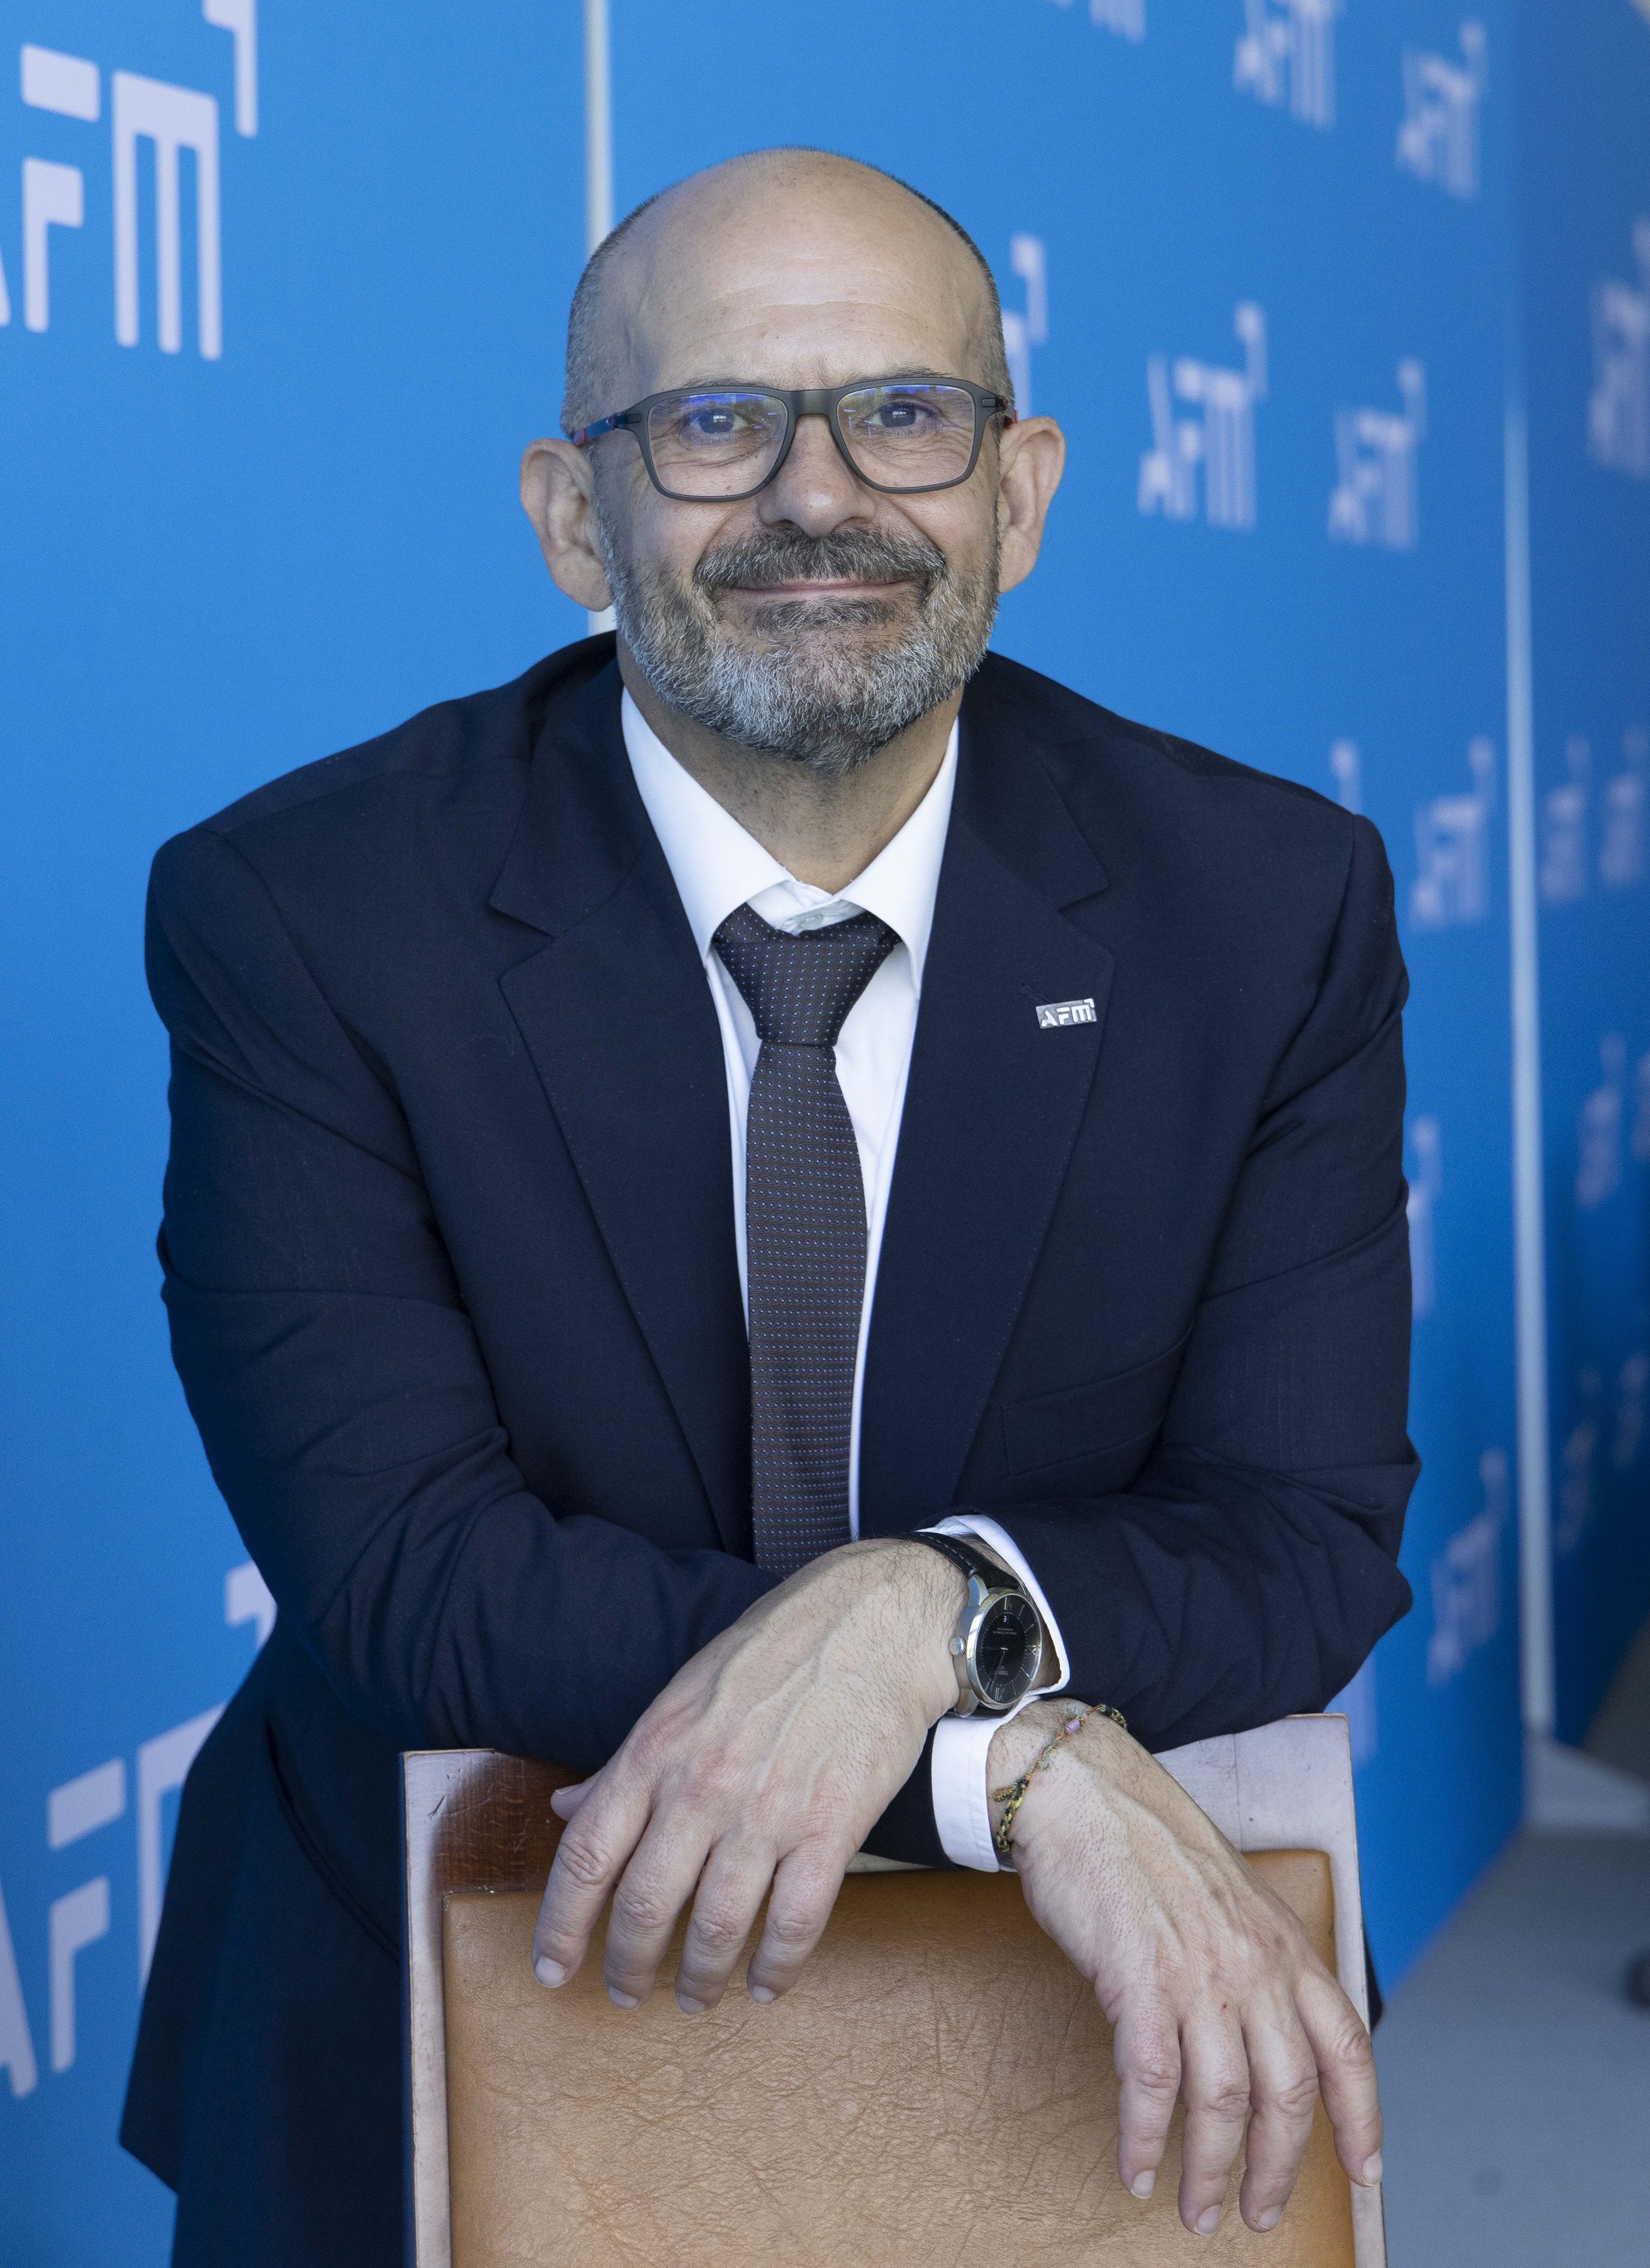 José Pérez Berdud, president of AFM Cluster